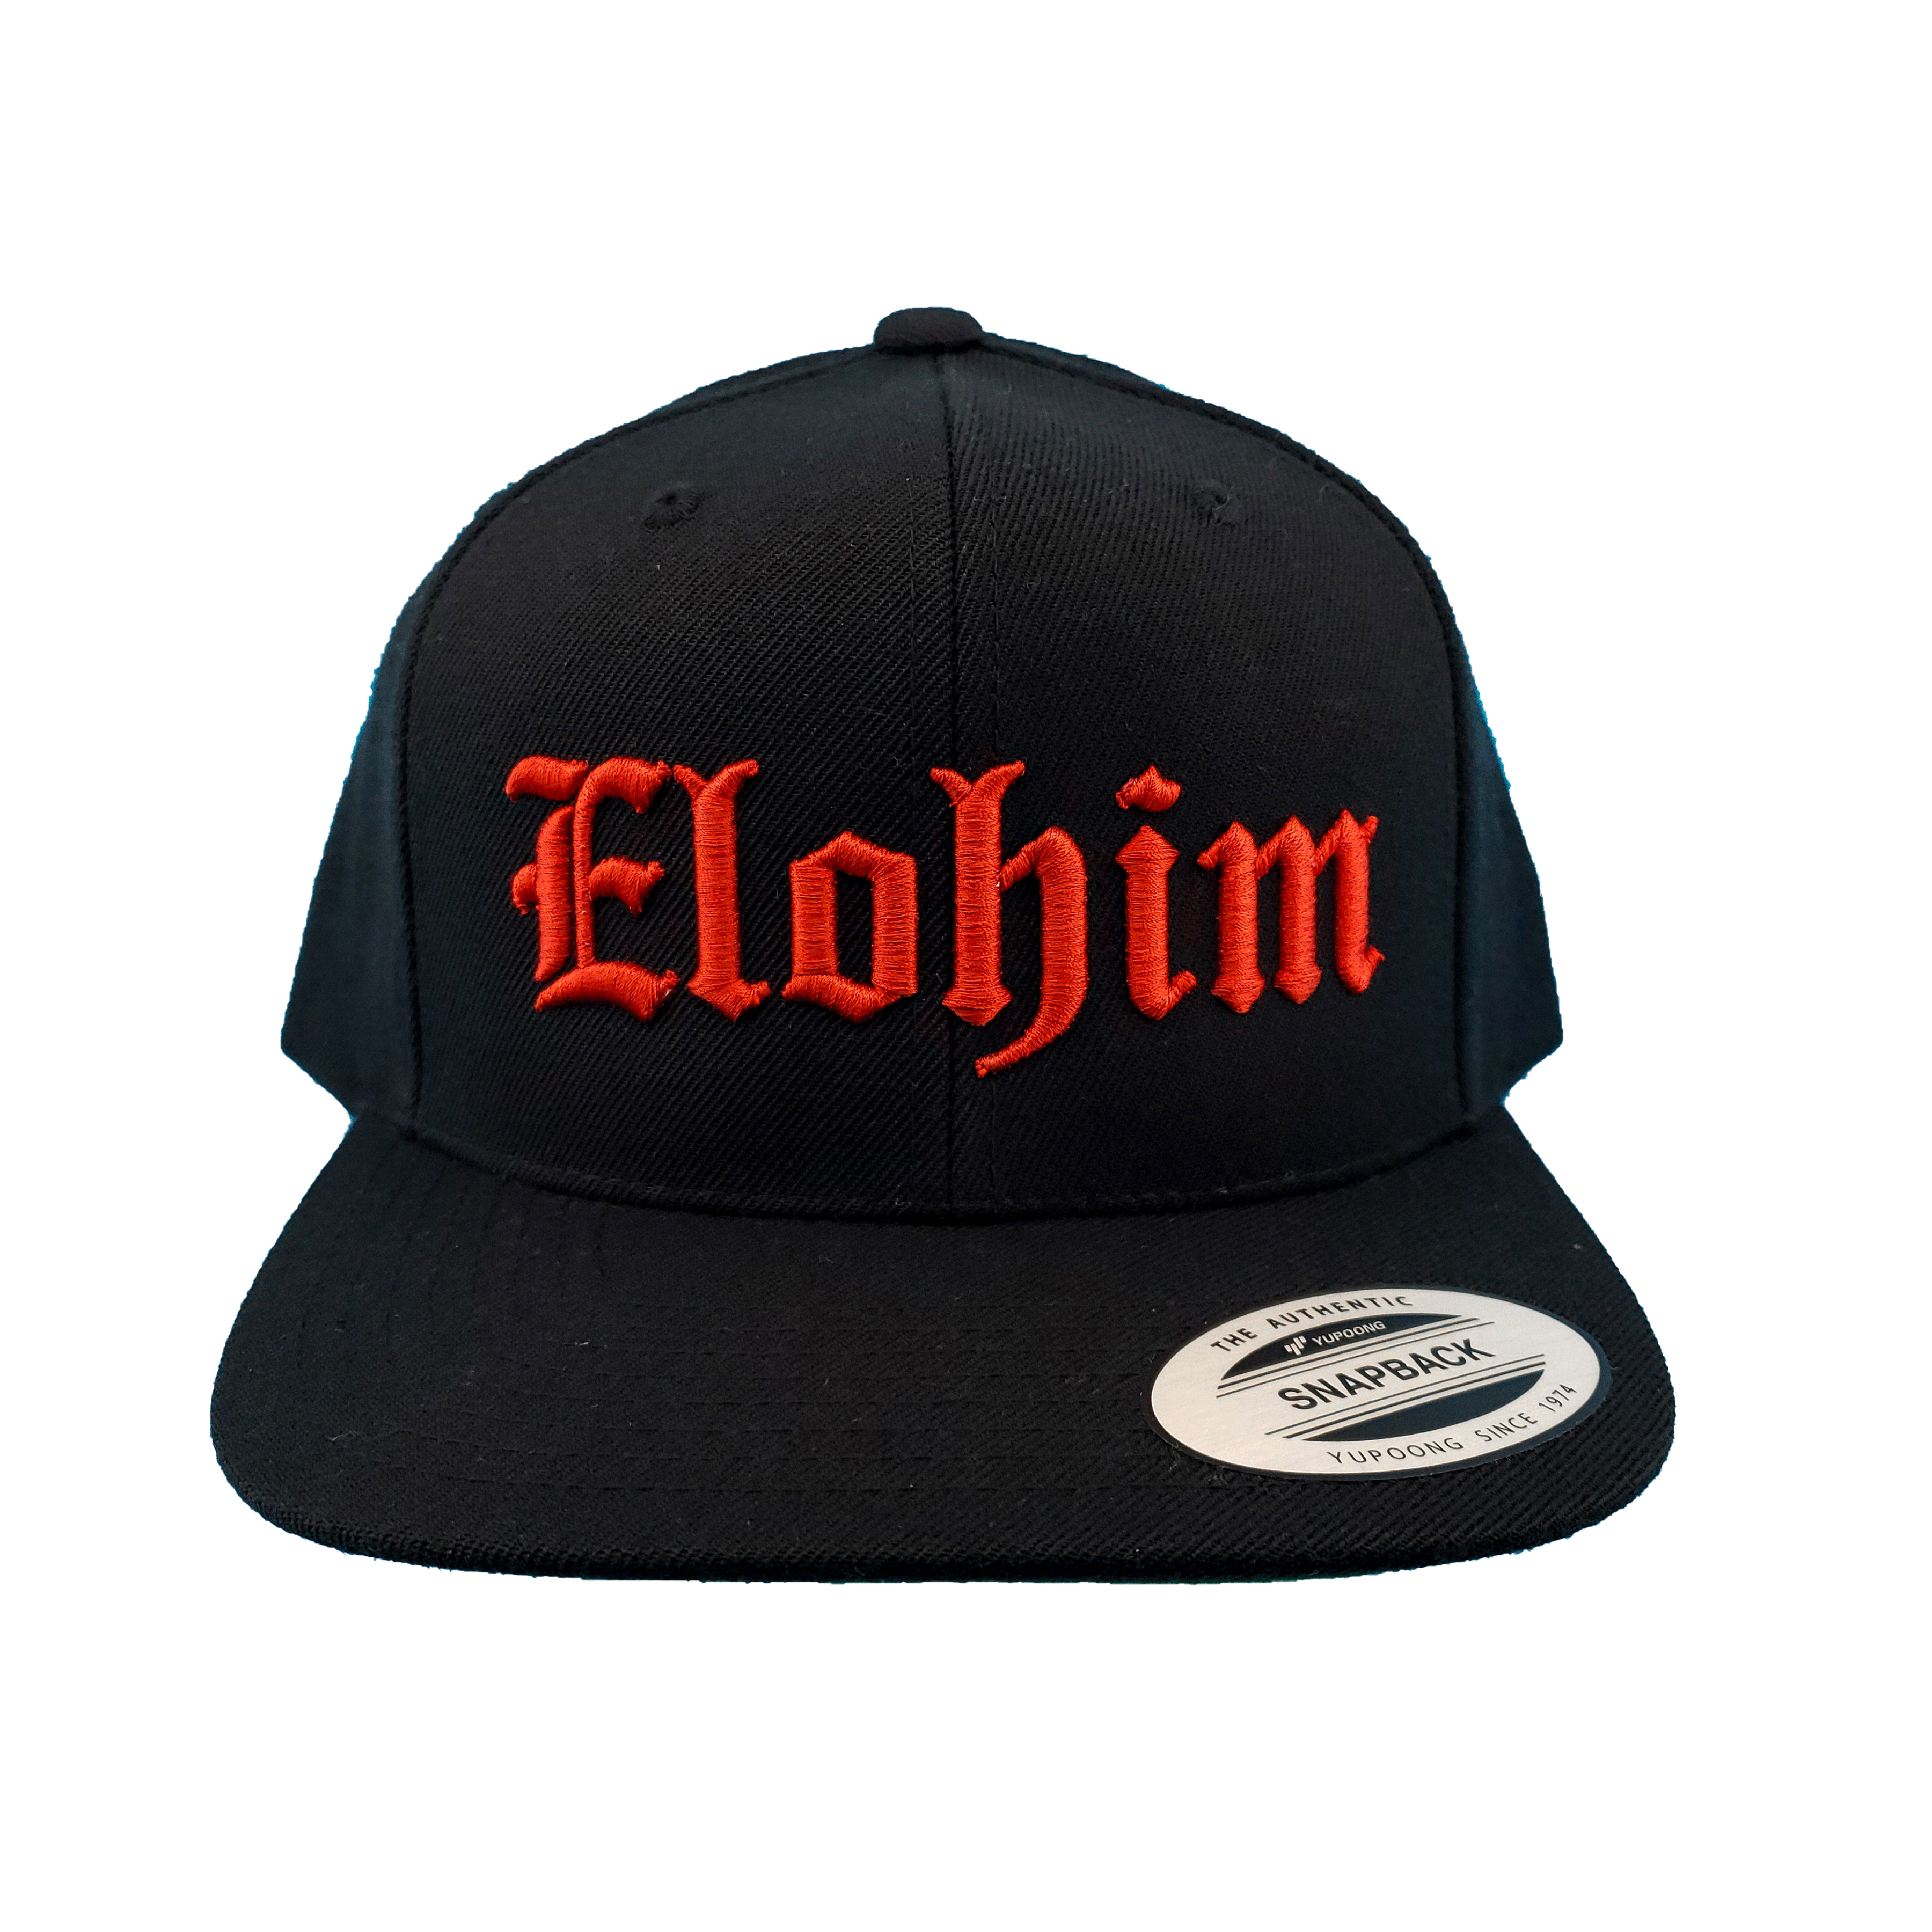 "Elohim" Snapback (Black/Red)